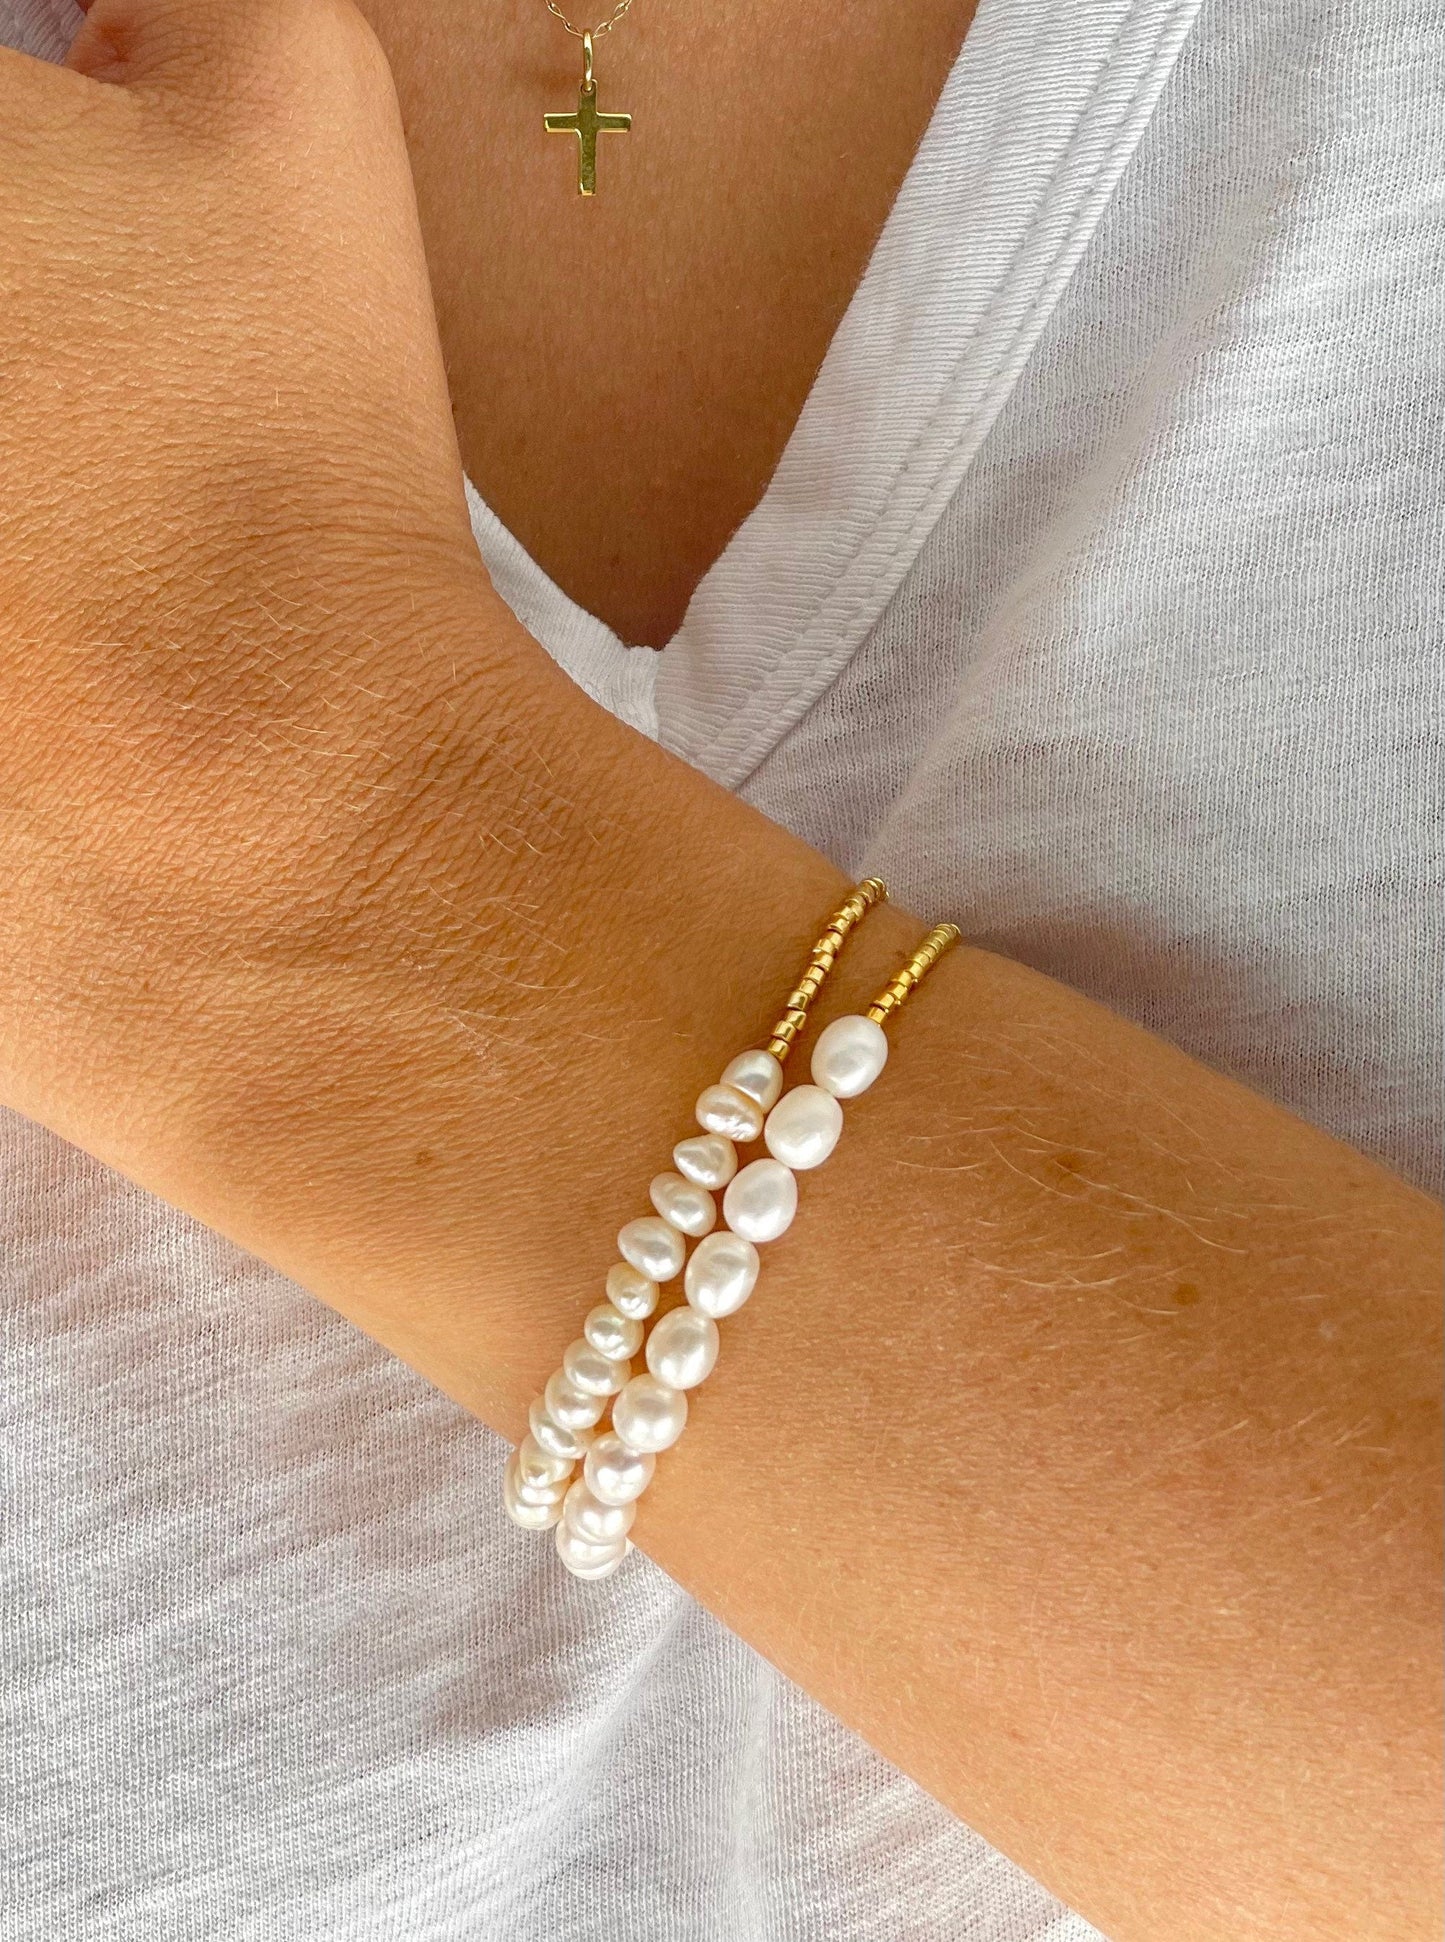 Mini Pearlies Beaded Bracelet-Gypsytear